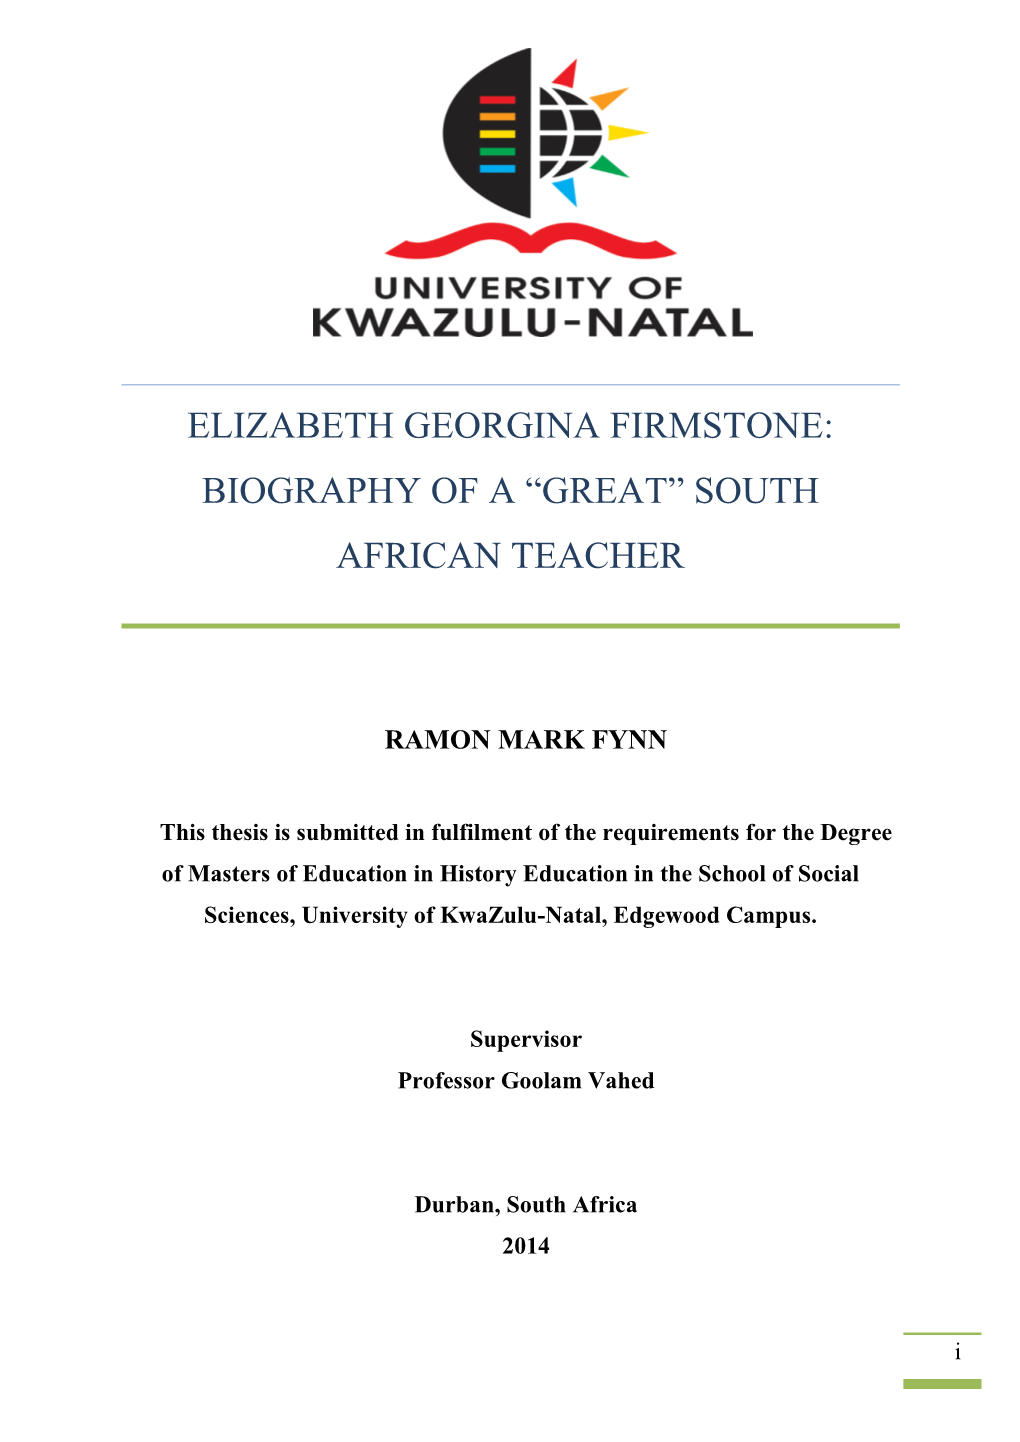 Elizabeth Georgina Firmstone: Biography of a “Great” South African Teacher